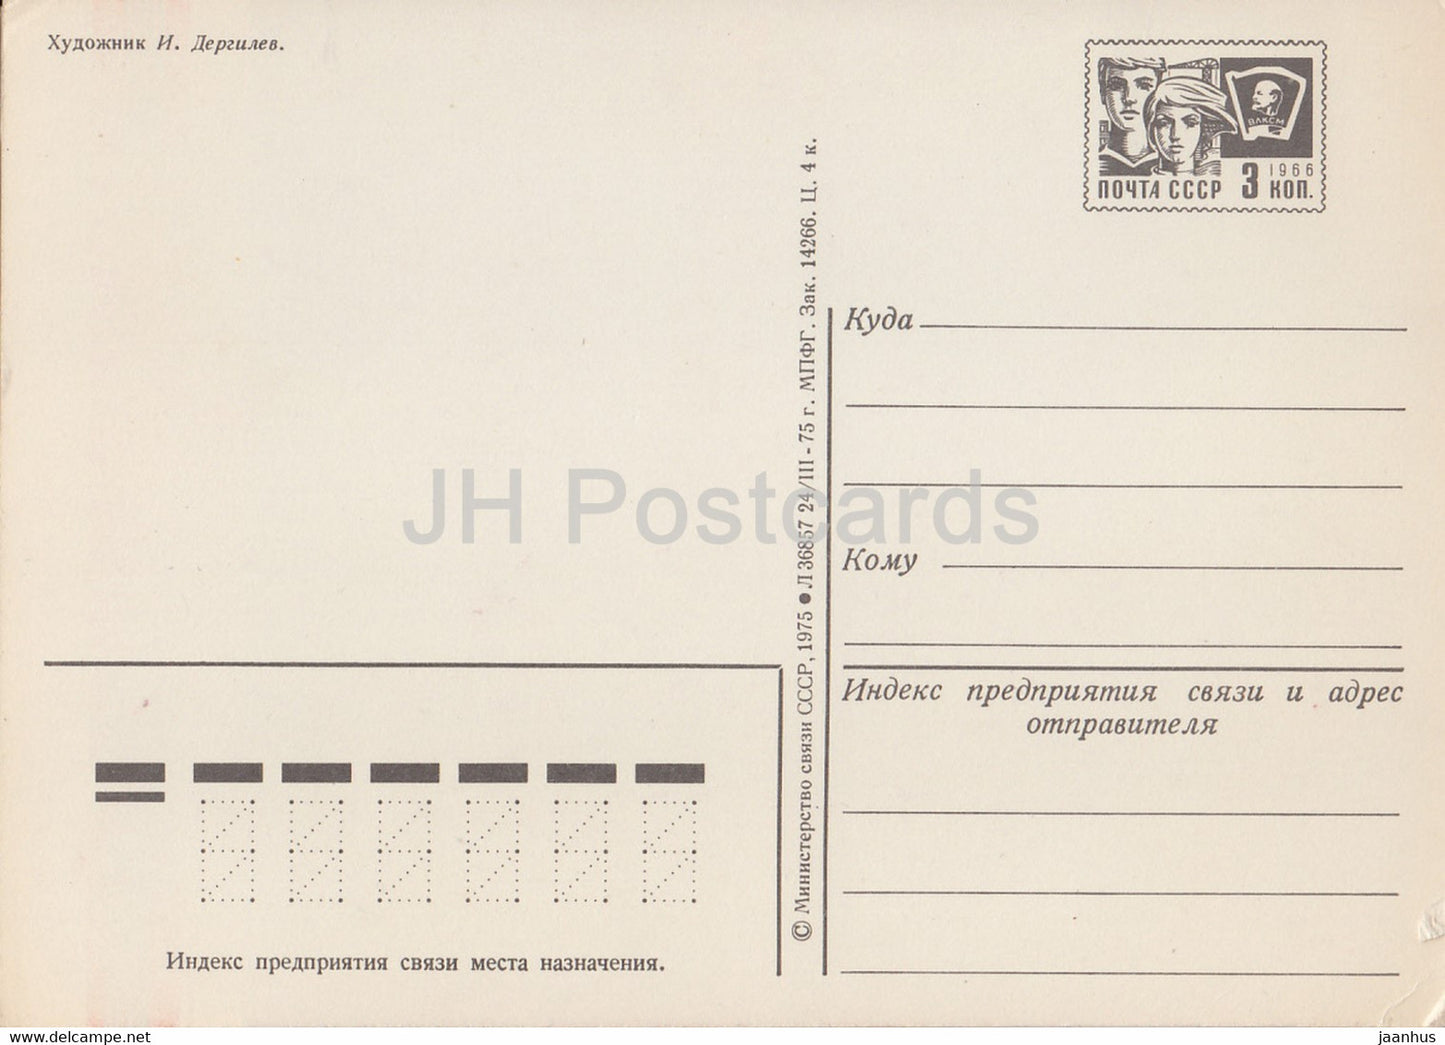 1917 October revolution Anniversary greeting Card by I. Dergilyev - Carnations - flowers - 1975 - Russia USSR - unused